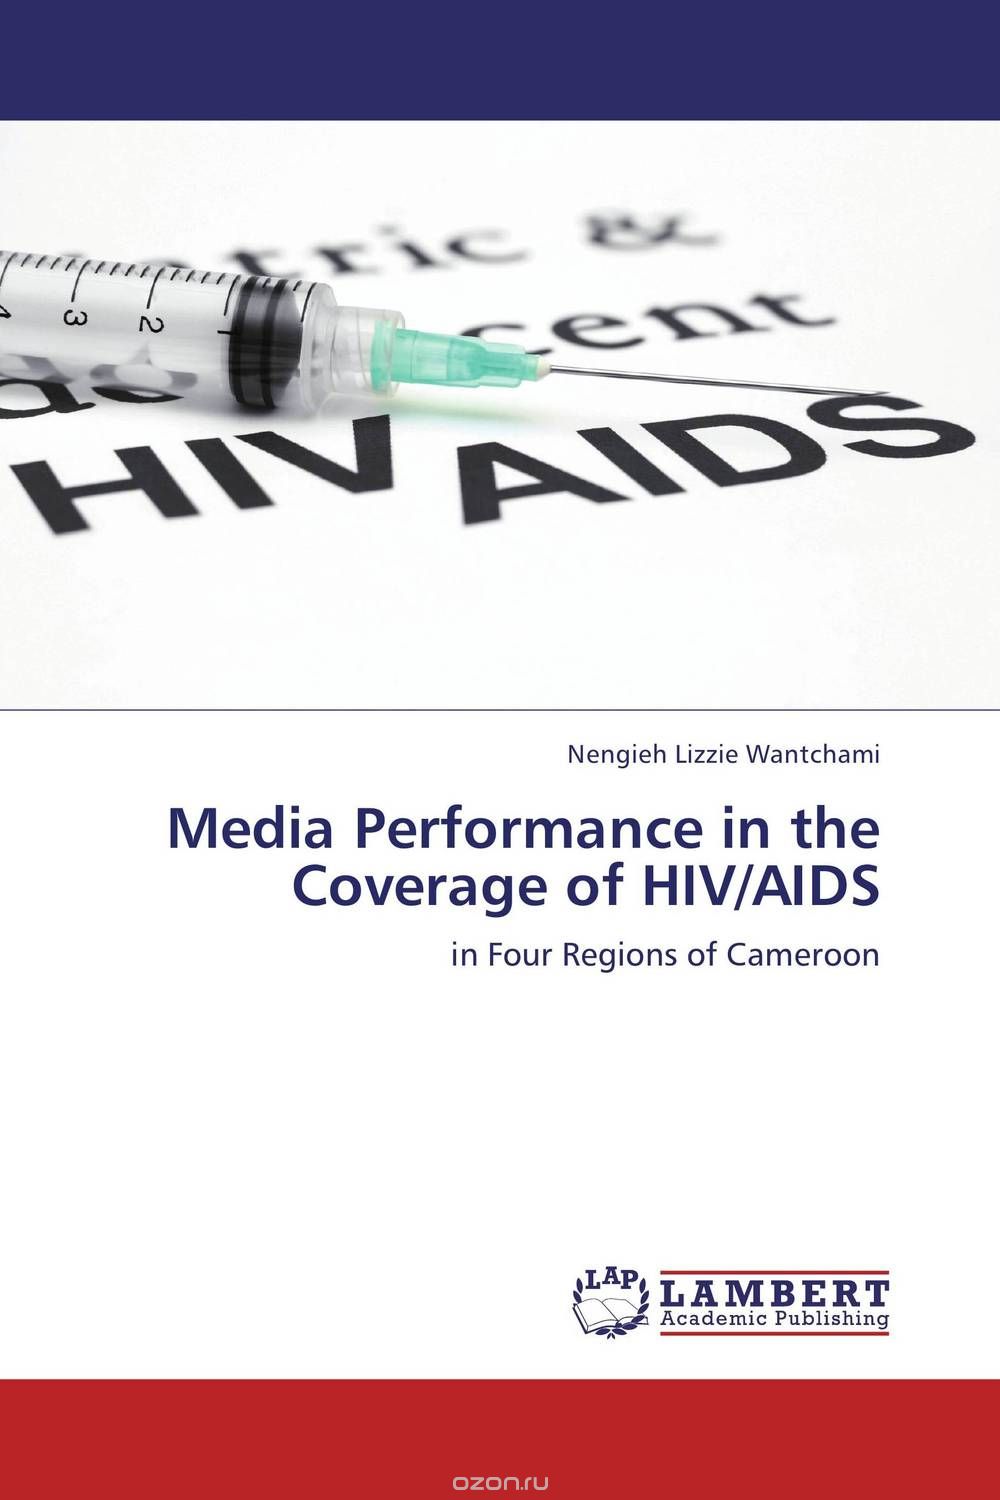 Скачать книгу "Media Performance in the Coverage of HIV/AIDS"